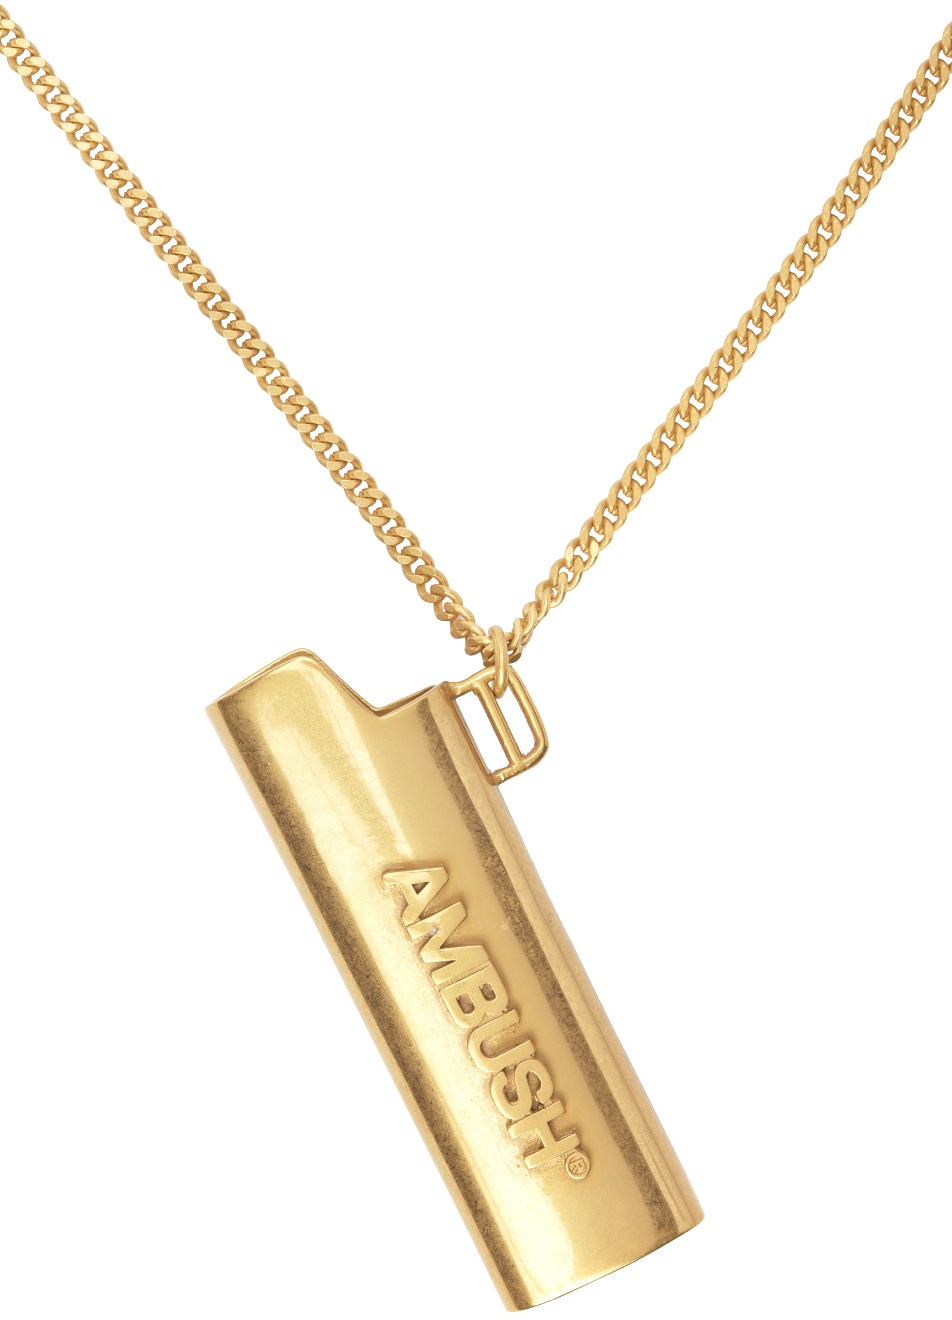 Ambush Gold Logo Lighter Case Necklace Ambush